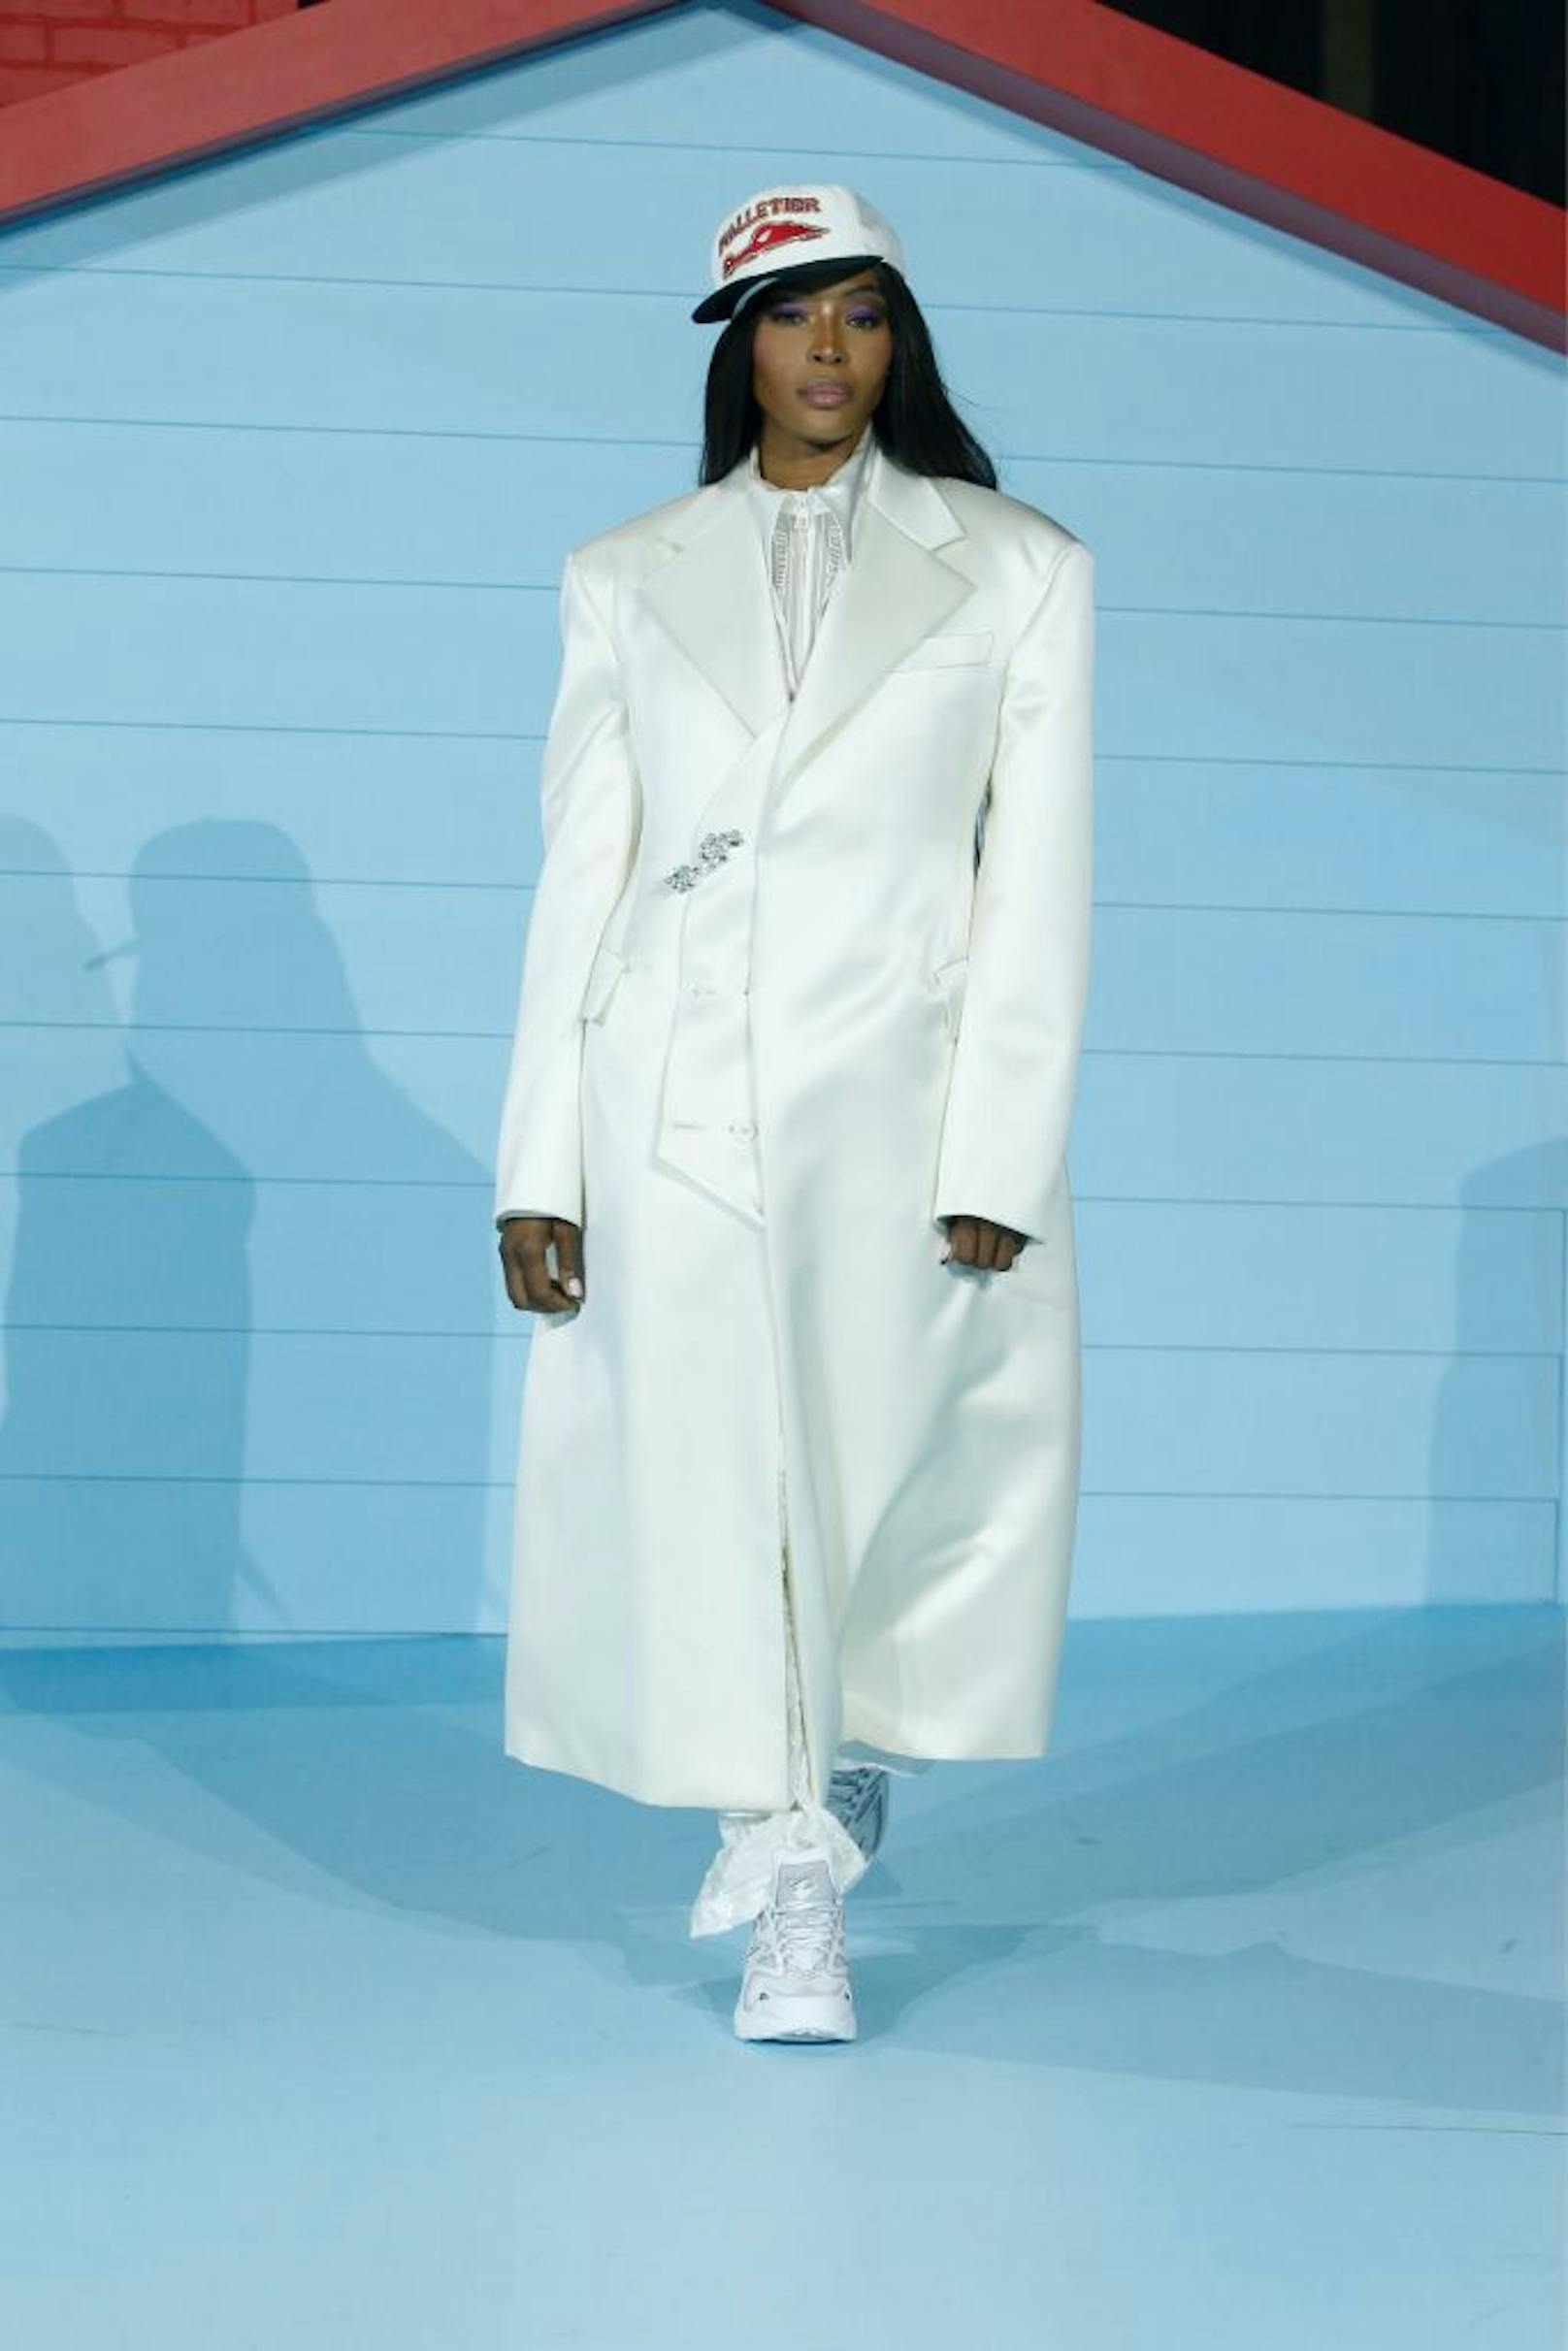 Naomi sendet letzten Gruß bei Louis Vuitton Show